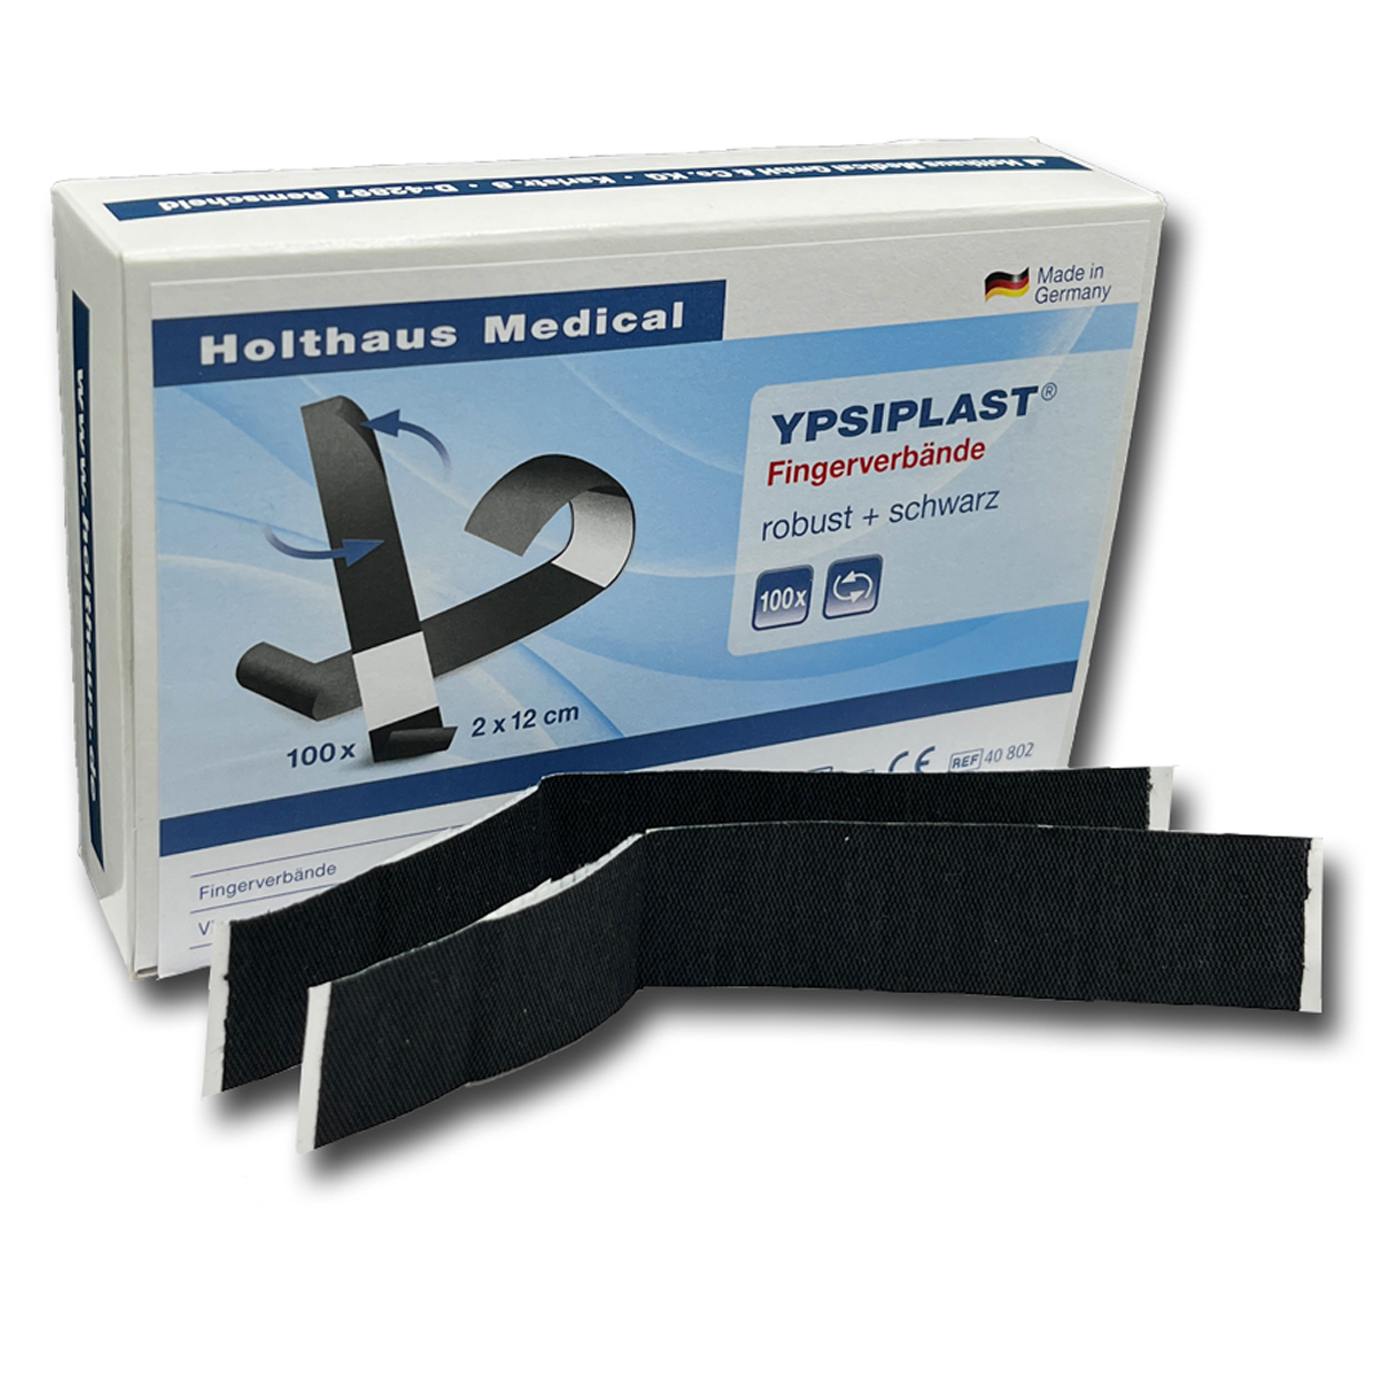 Holthaus Medical Ypsiplast Fingerverbände, robust + schwarz